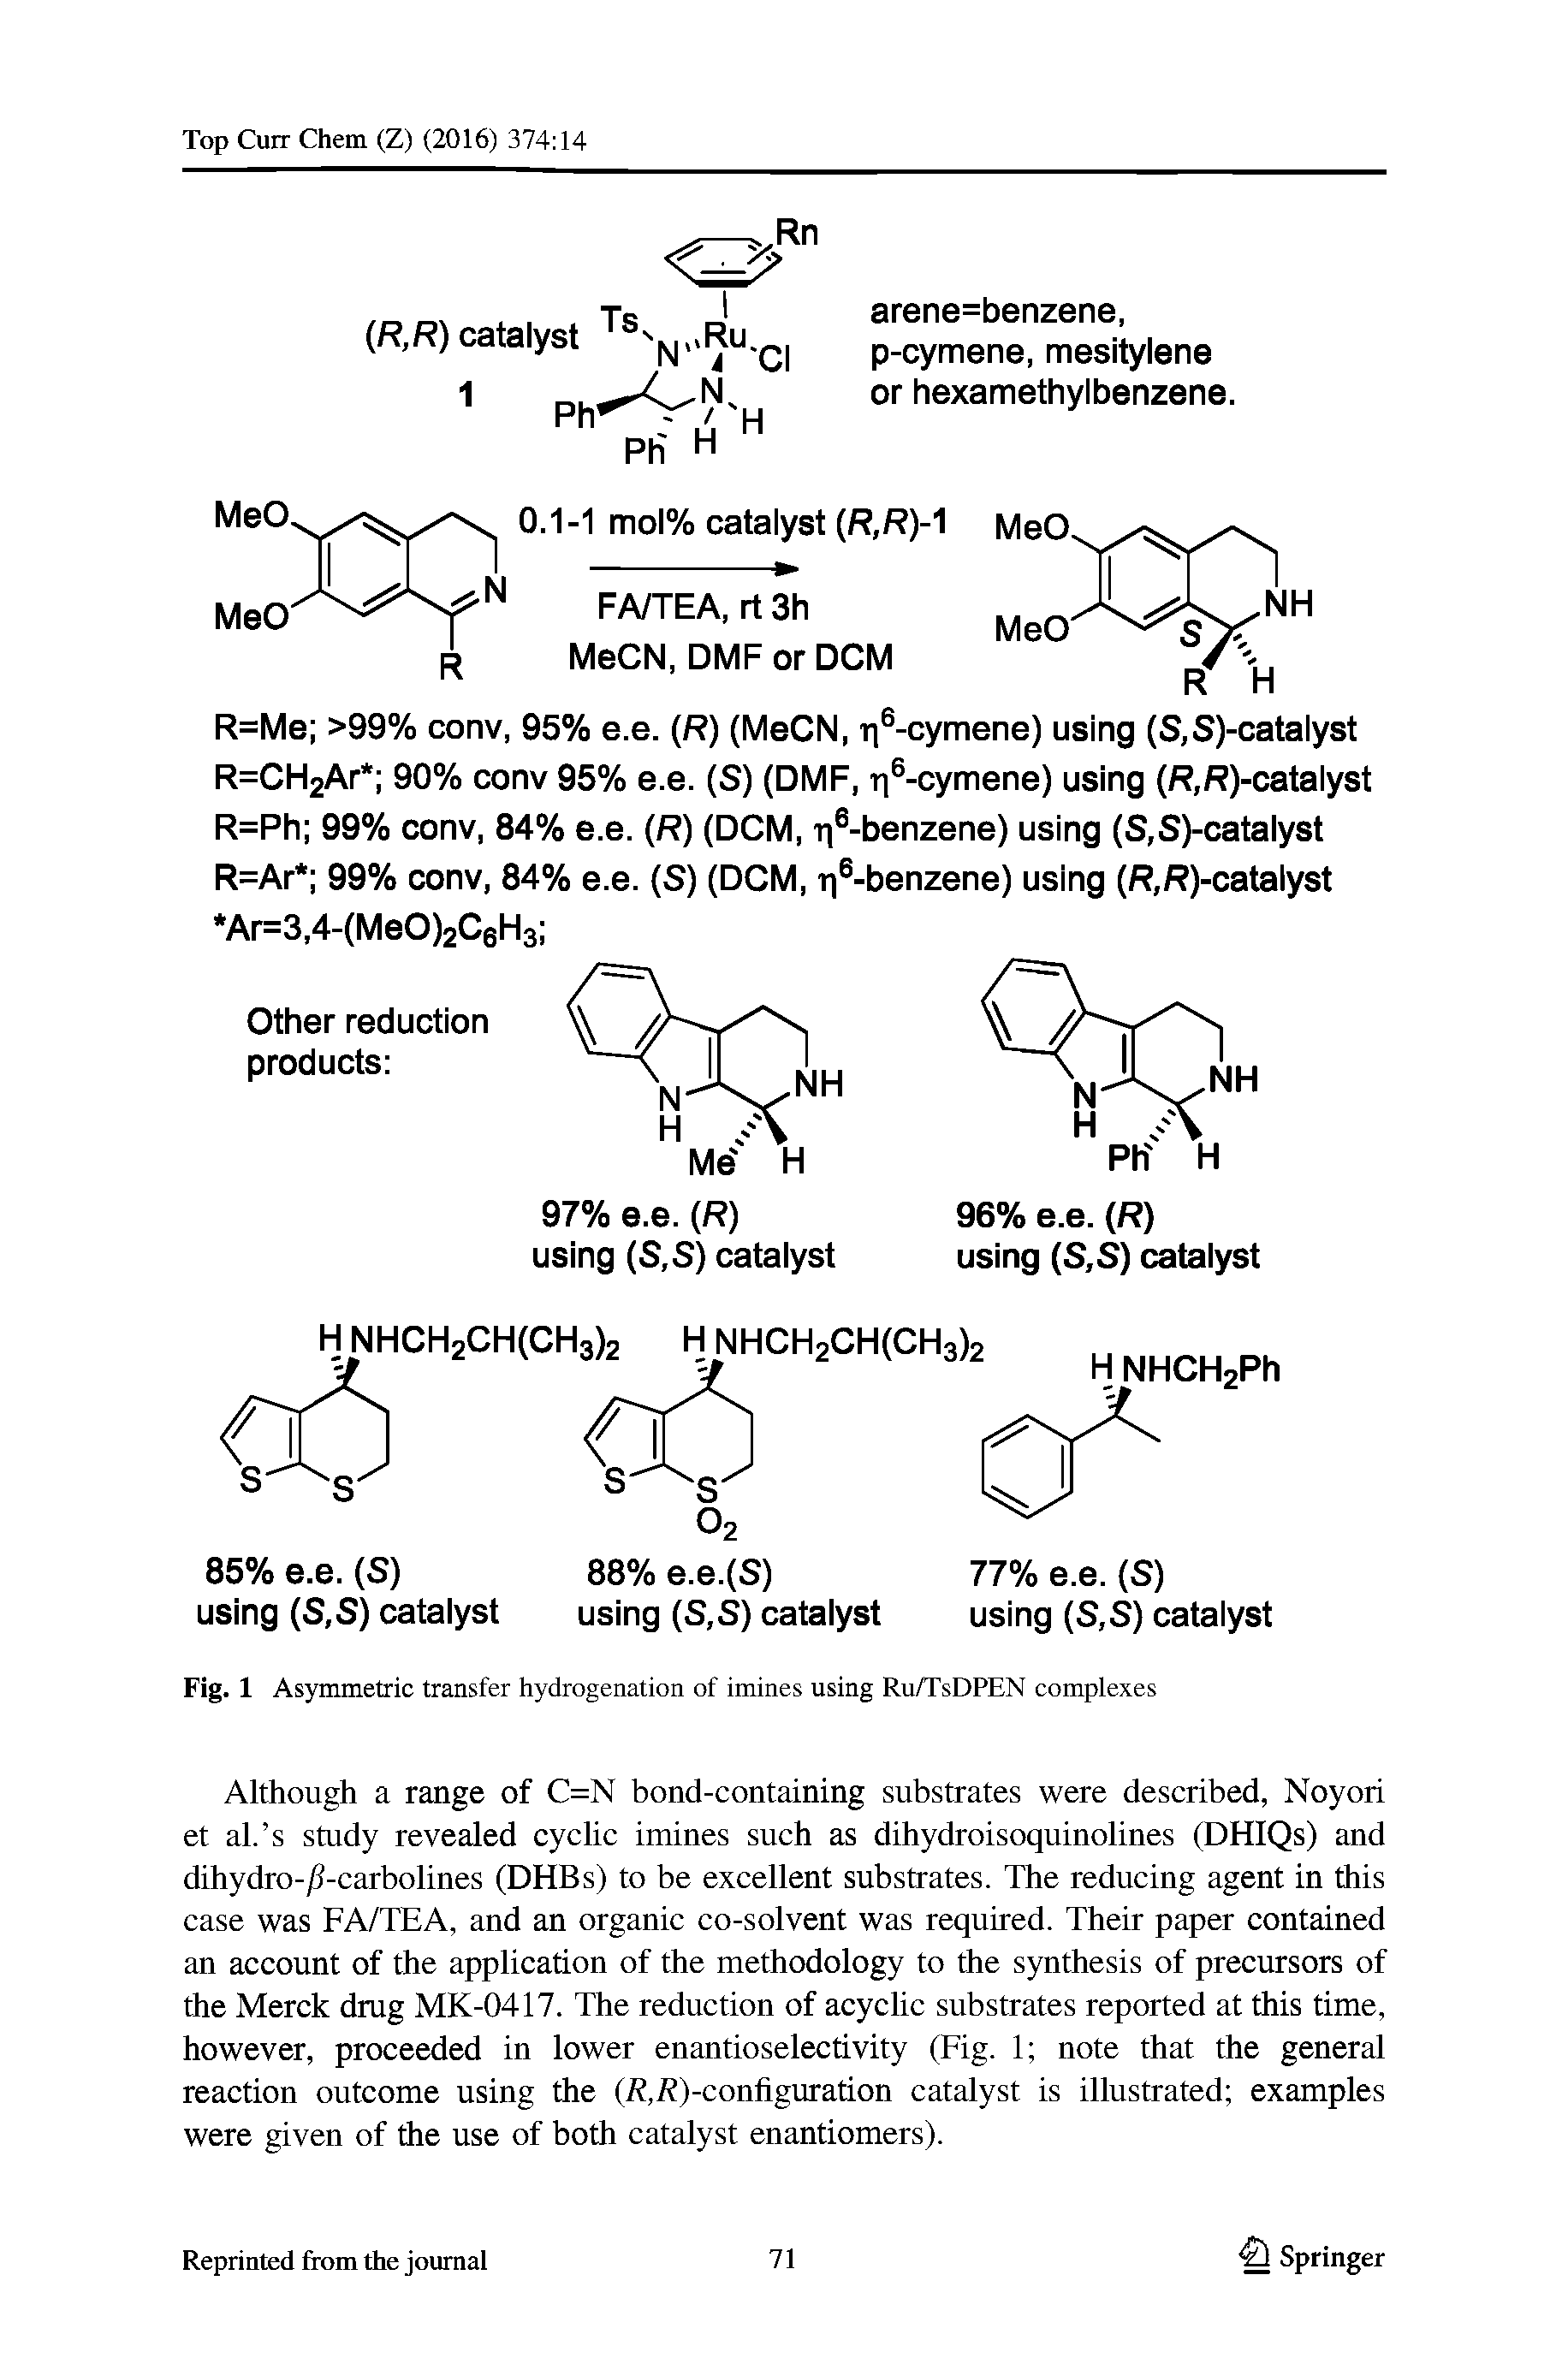 Fig. 1 Asymmetric transfer hydrogenation of imines using Ru/TsDPEN complexes...